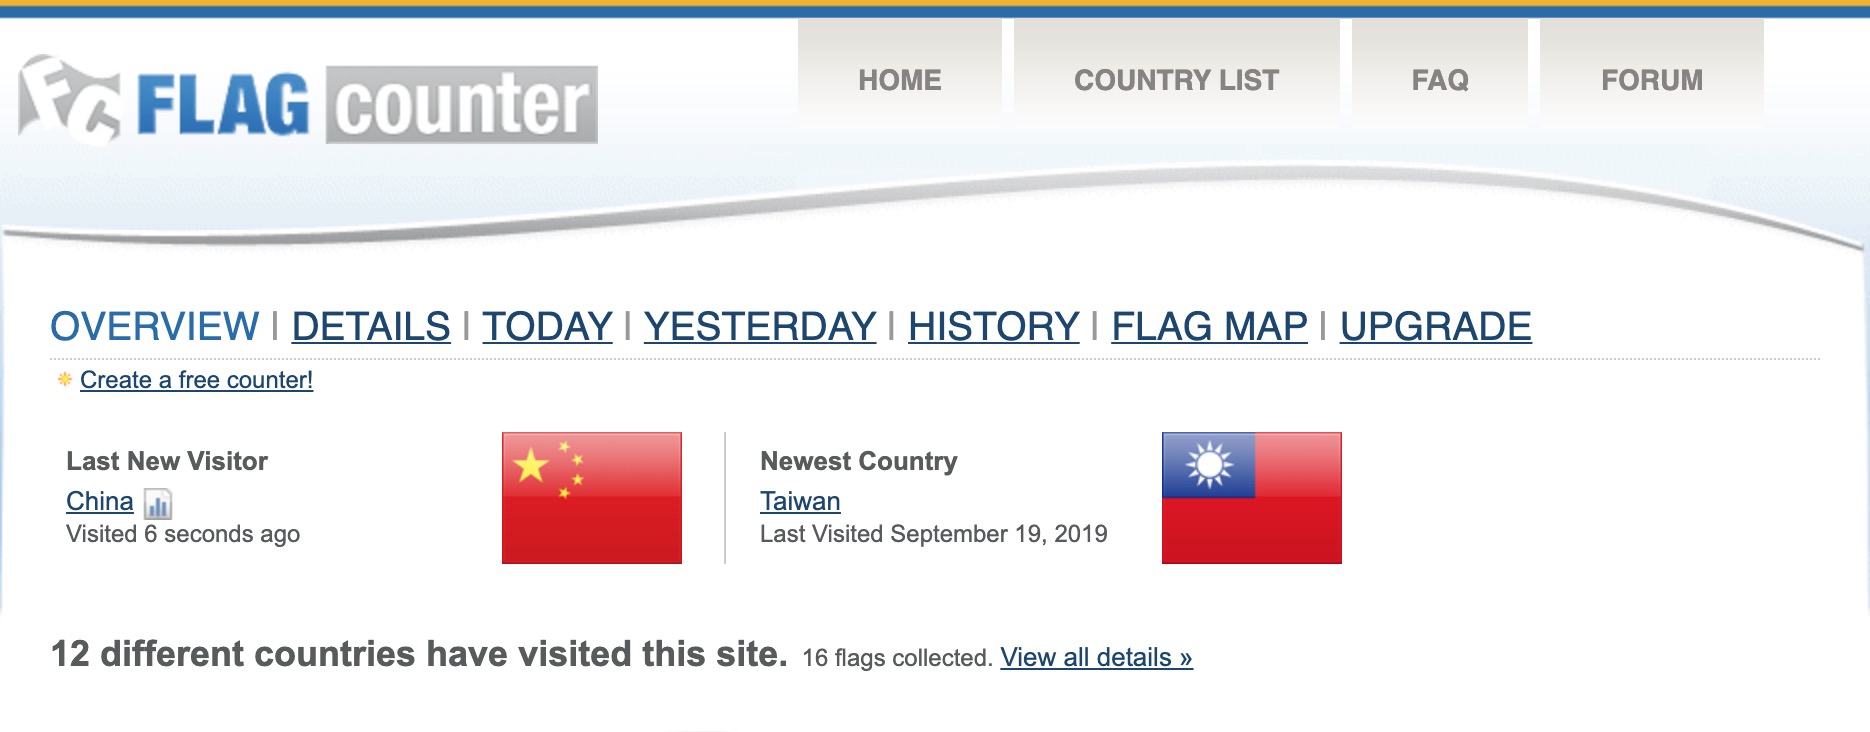 FlagCounter display Country: Taiwan